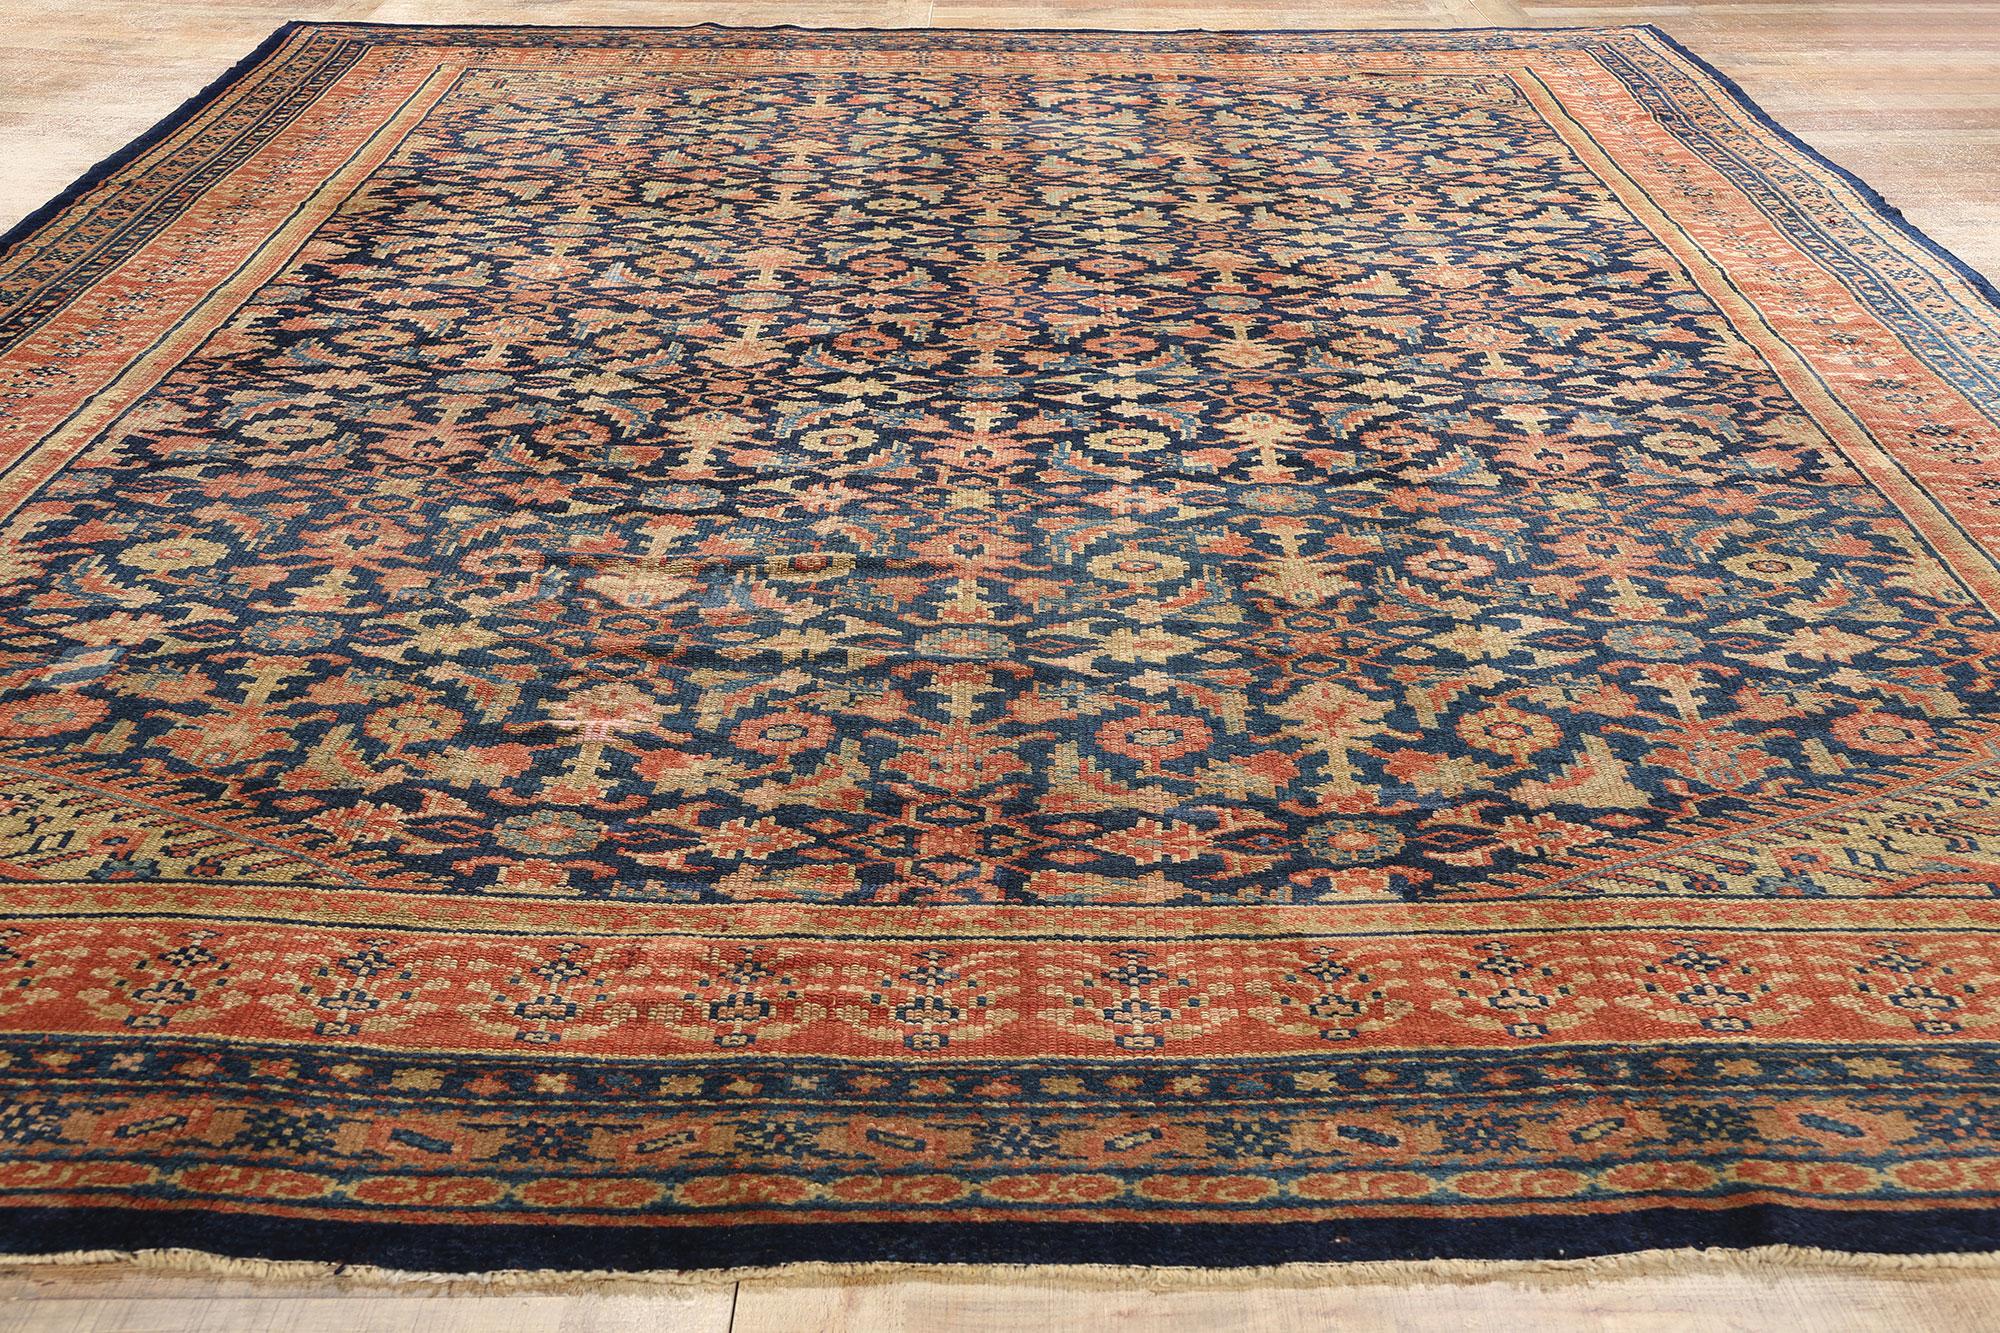 Late 19th Century Distressed Antique Navy Blue Persian Kurdish Carpet For Sale 2